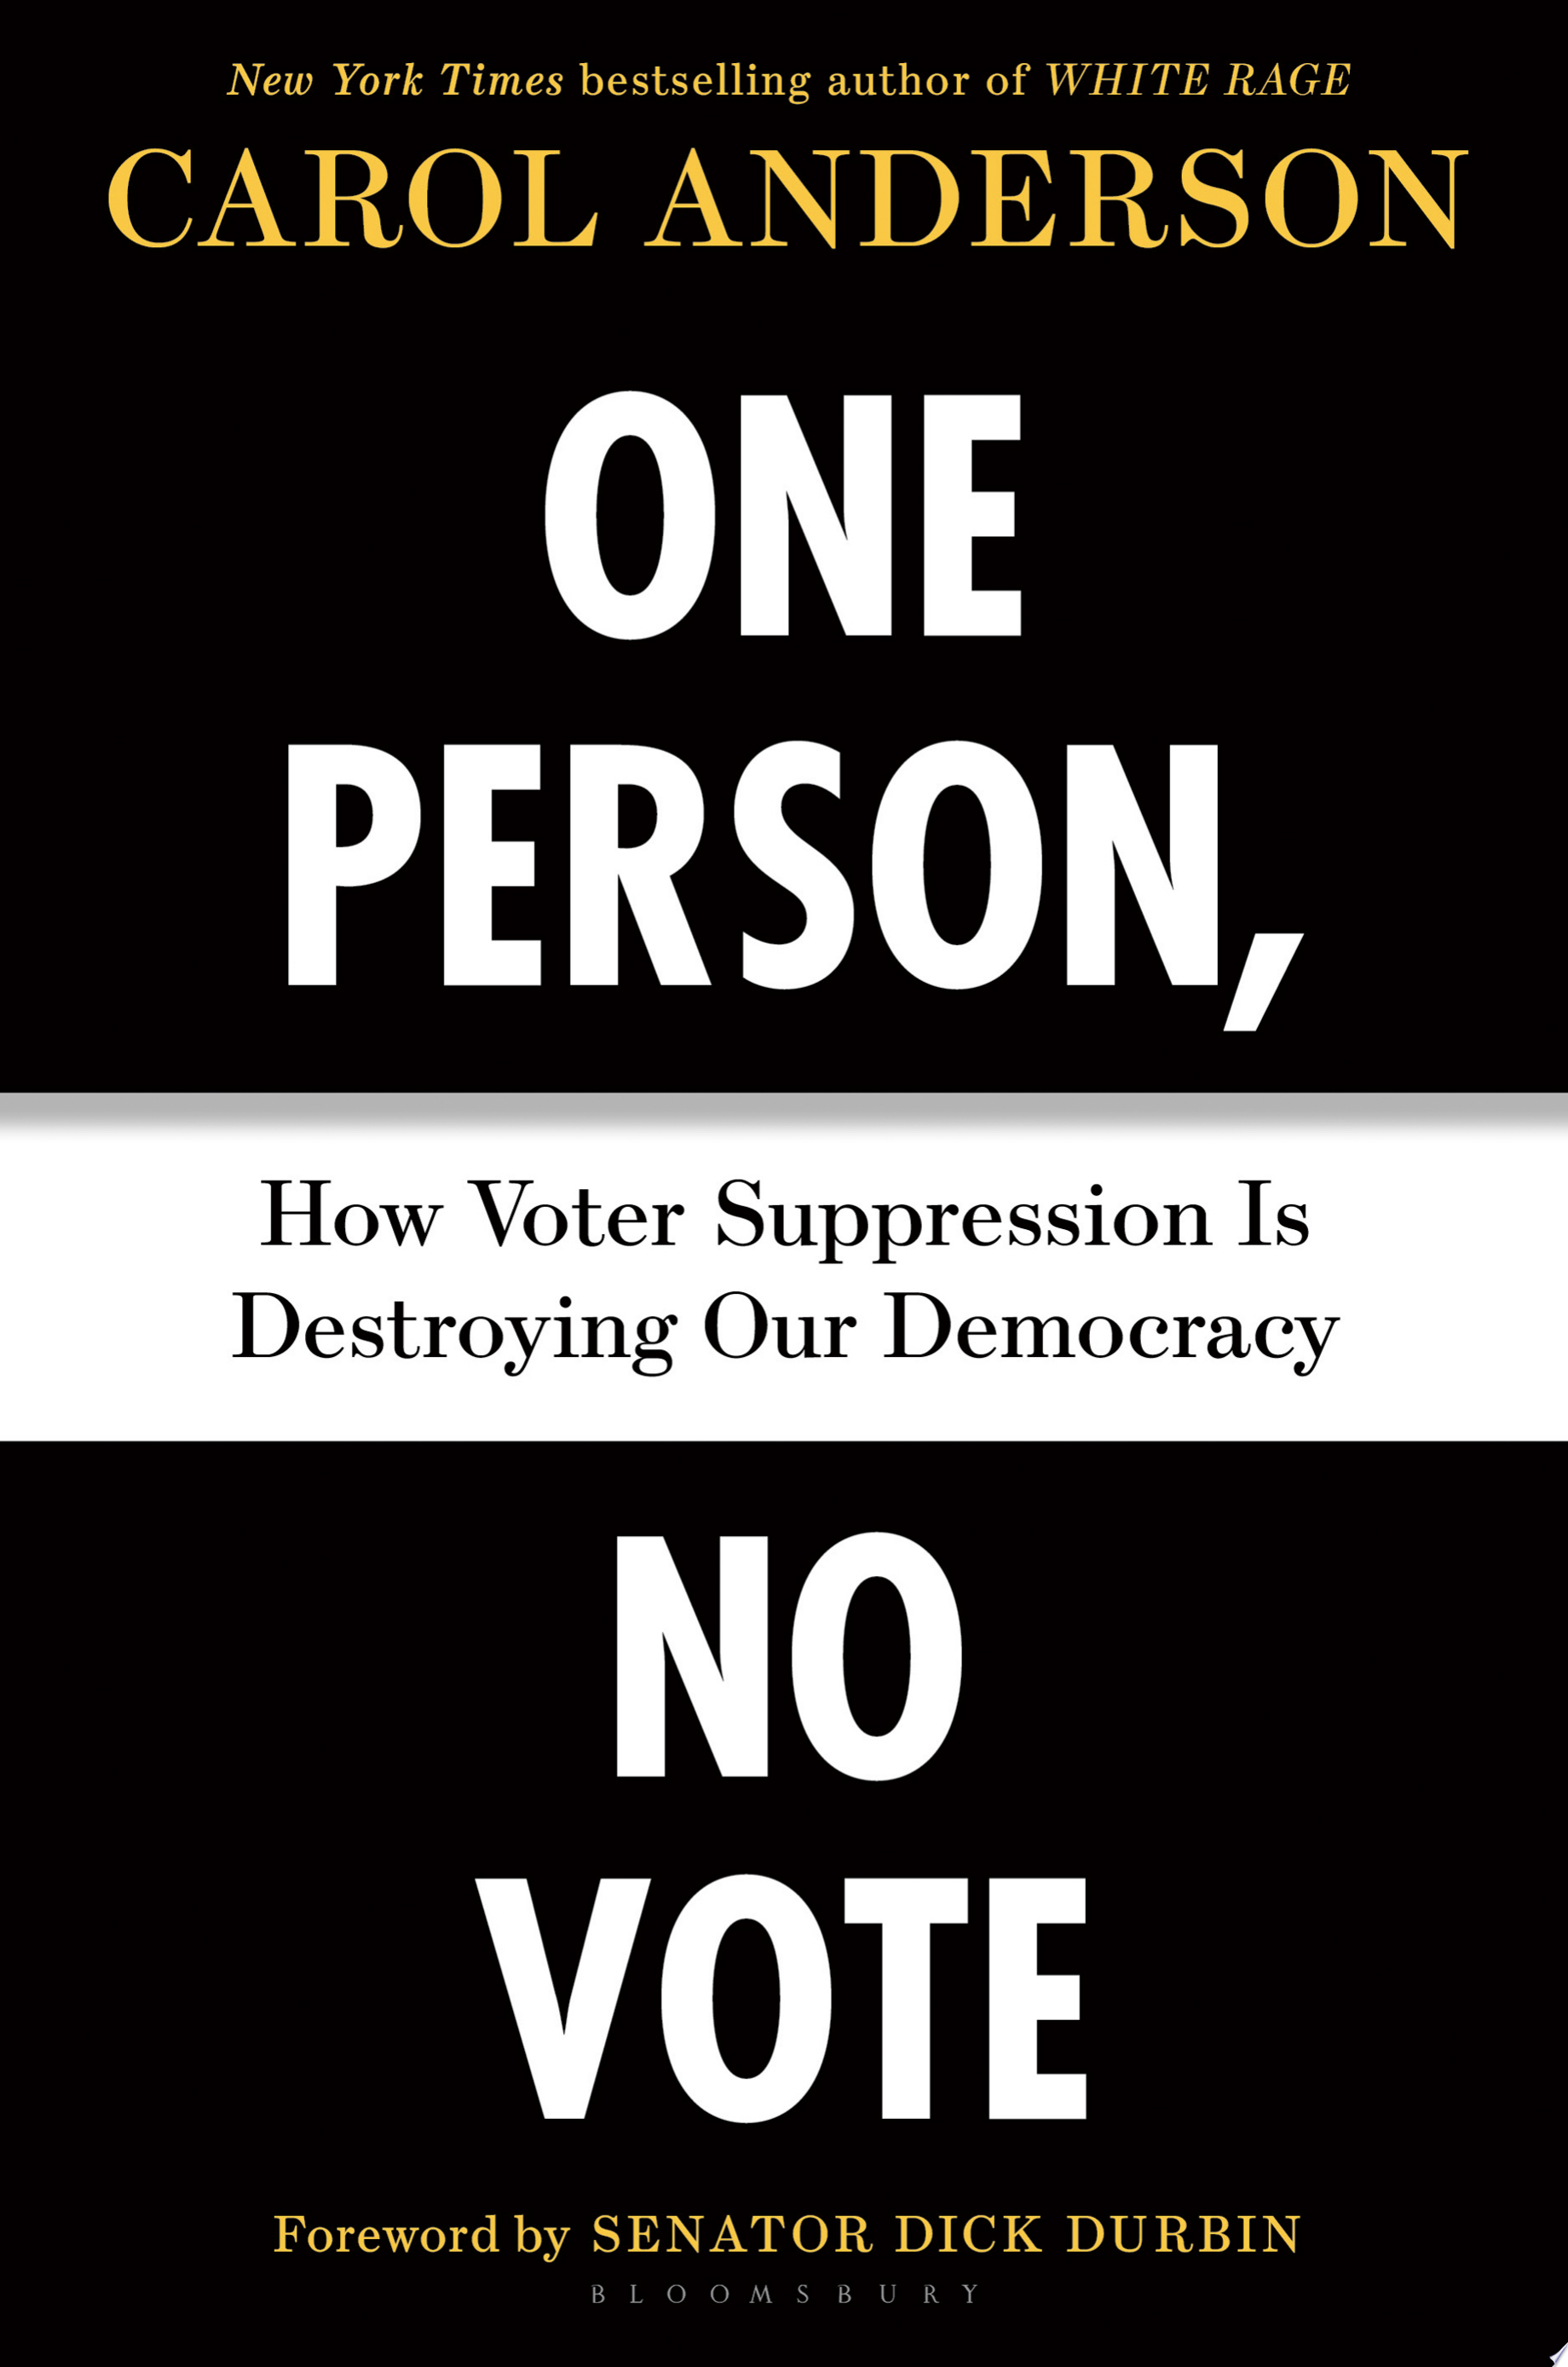 Image for "One Person, No Vote"